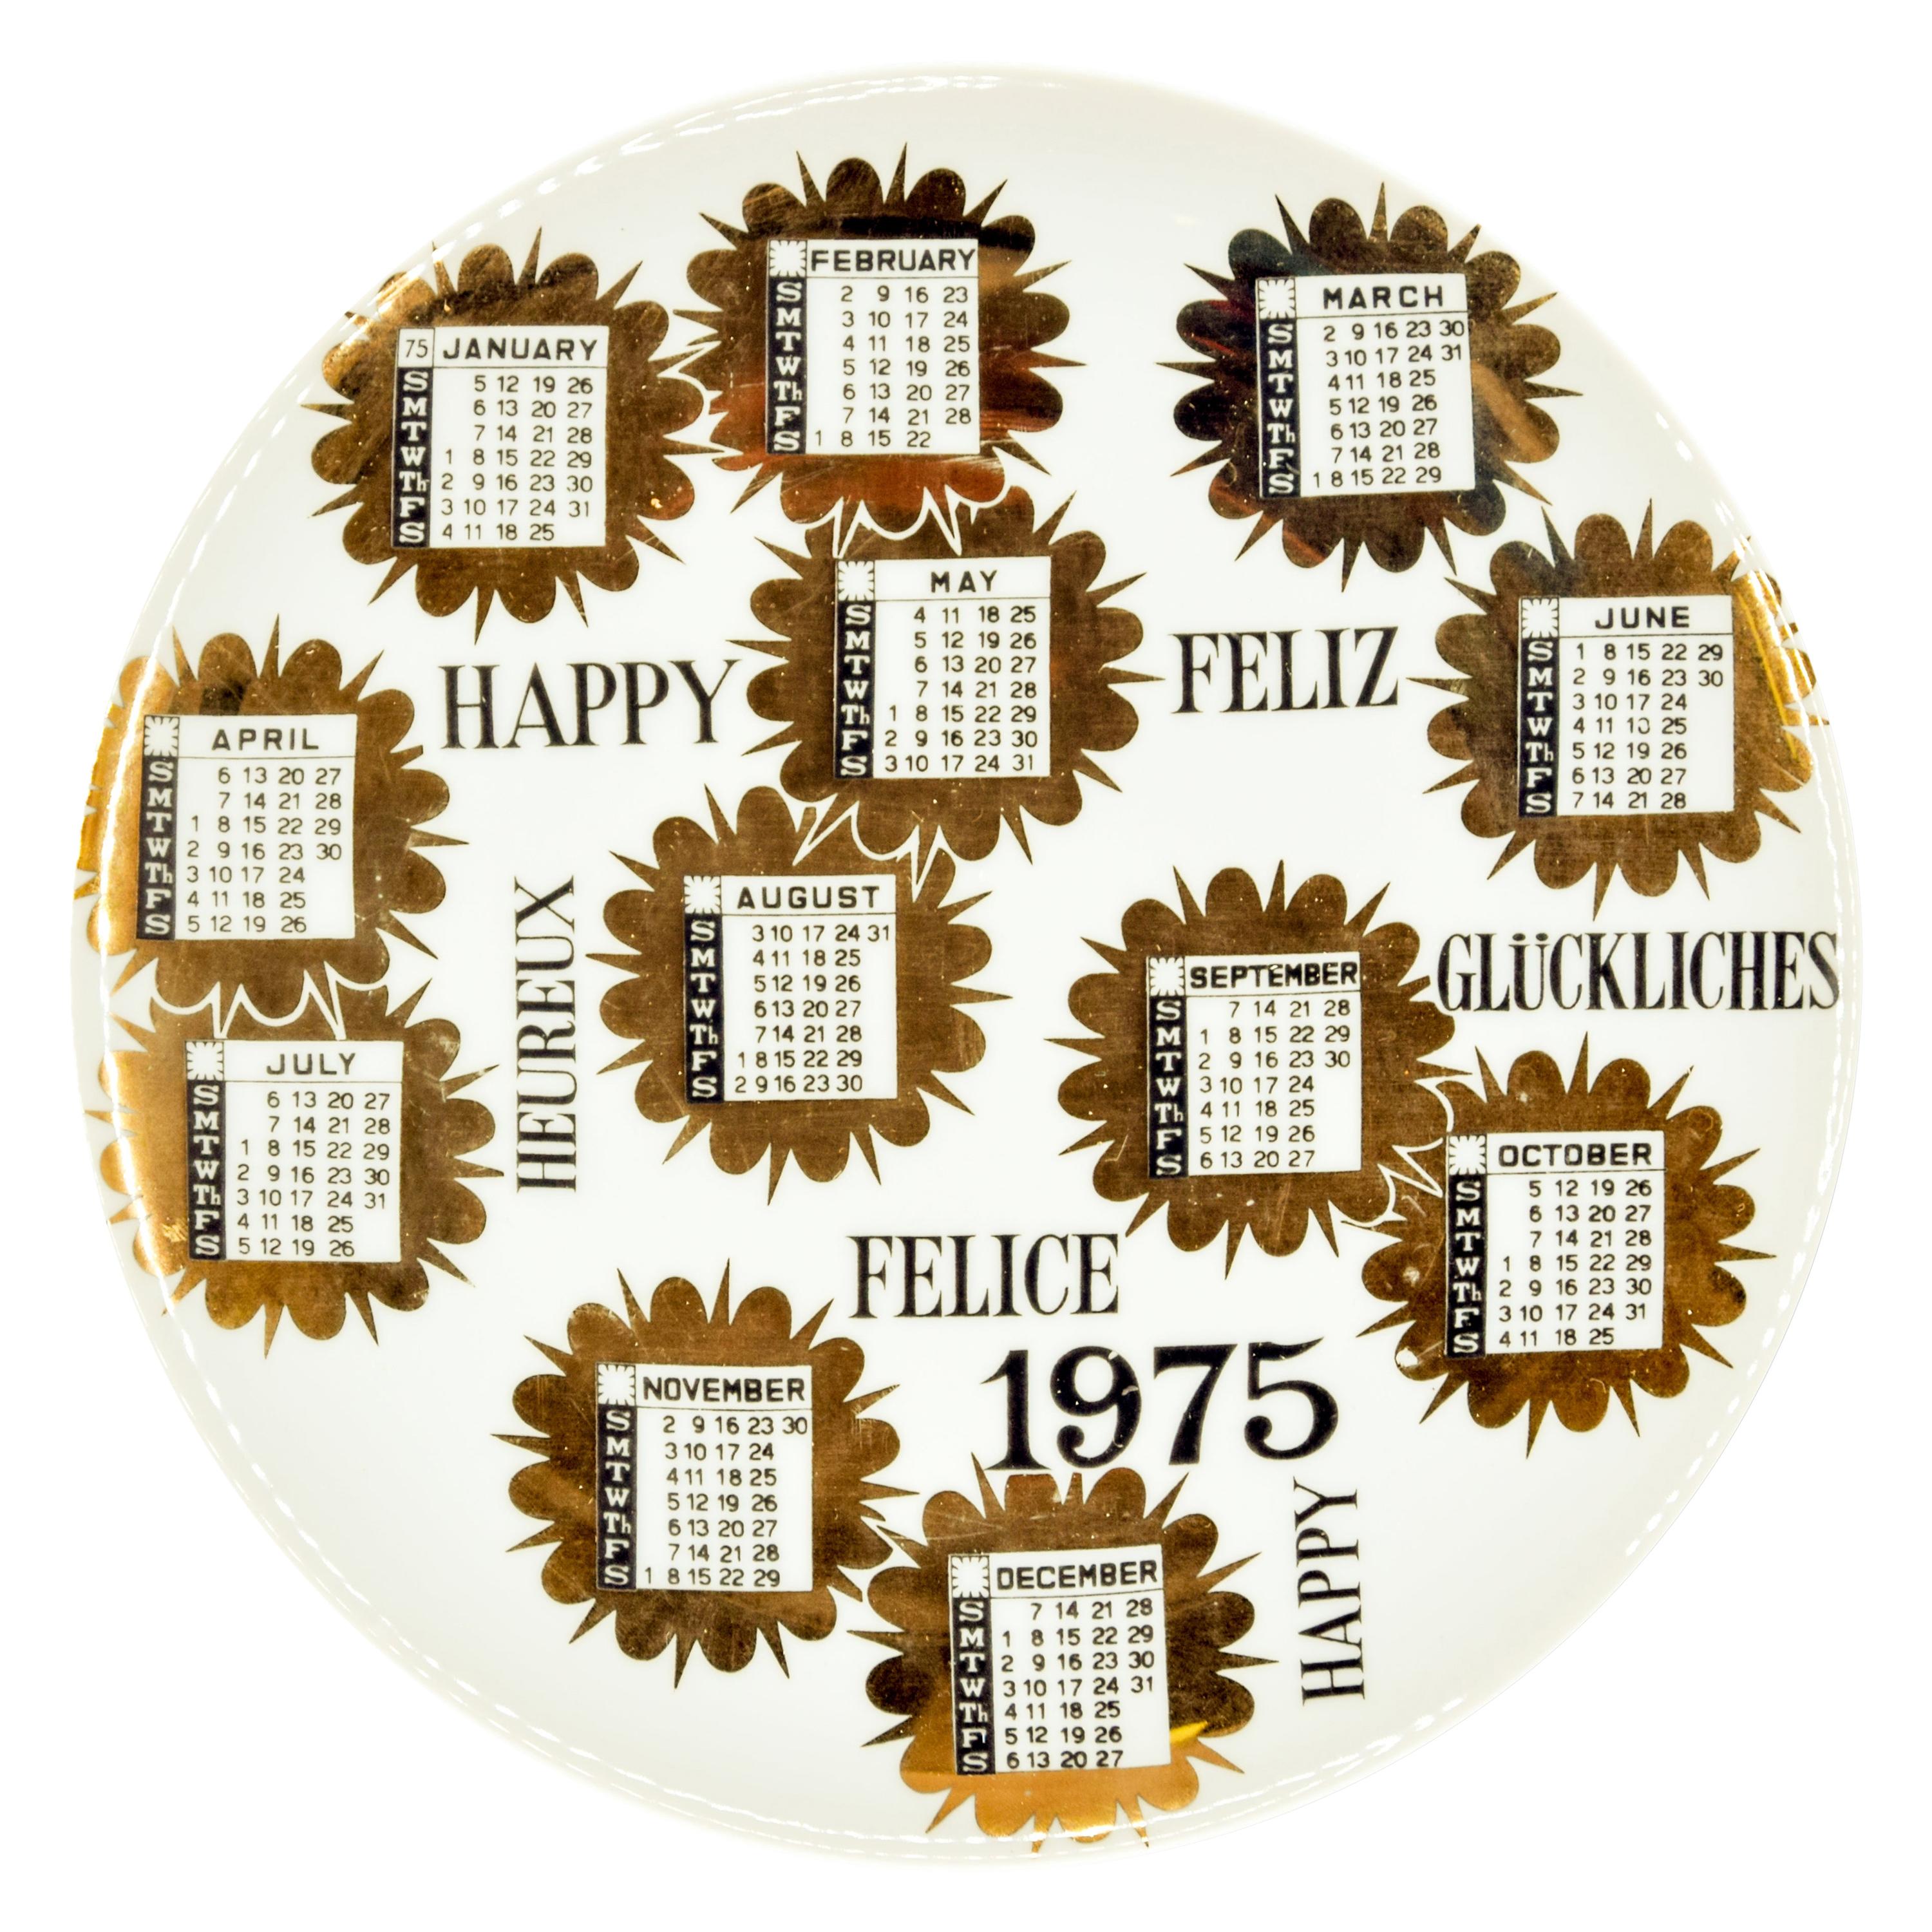 Happy 1975, Calendar Series by Piero Fornasetti, 1975